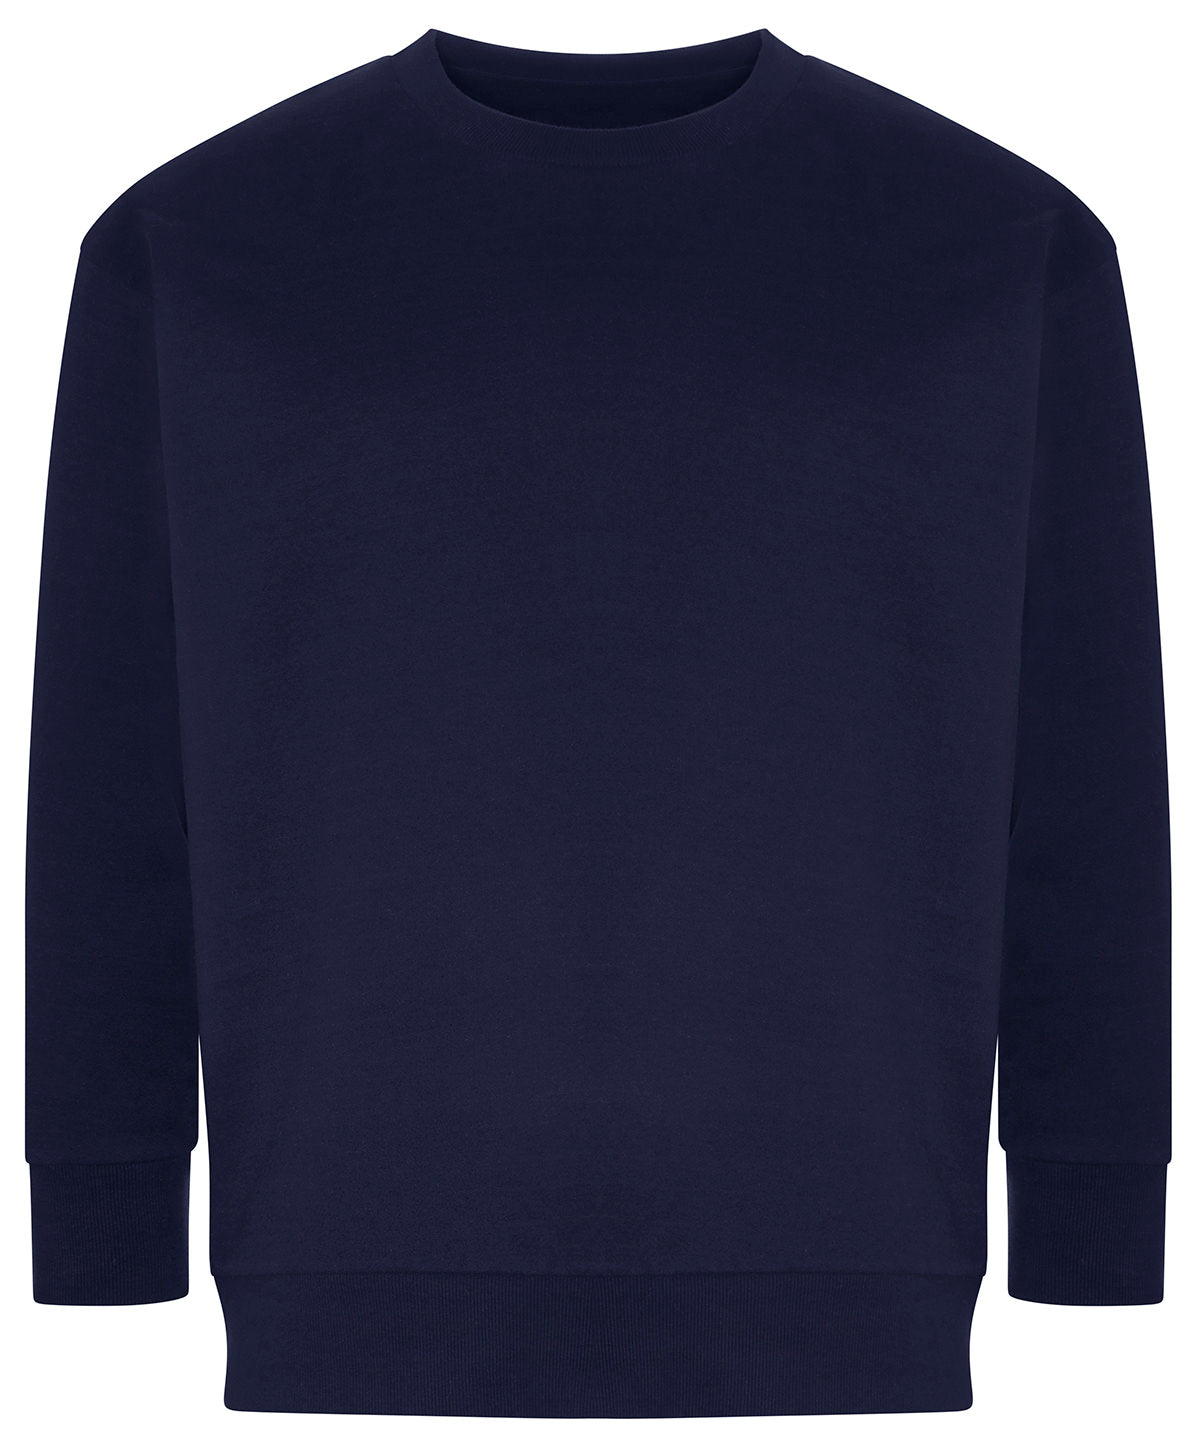 Personalised Sweatshirts - Black AWDis Ecologie Crater recycled sweatshirt